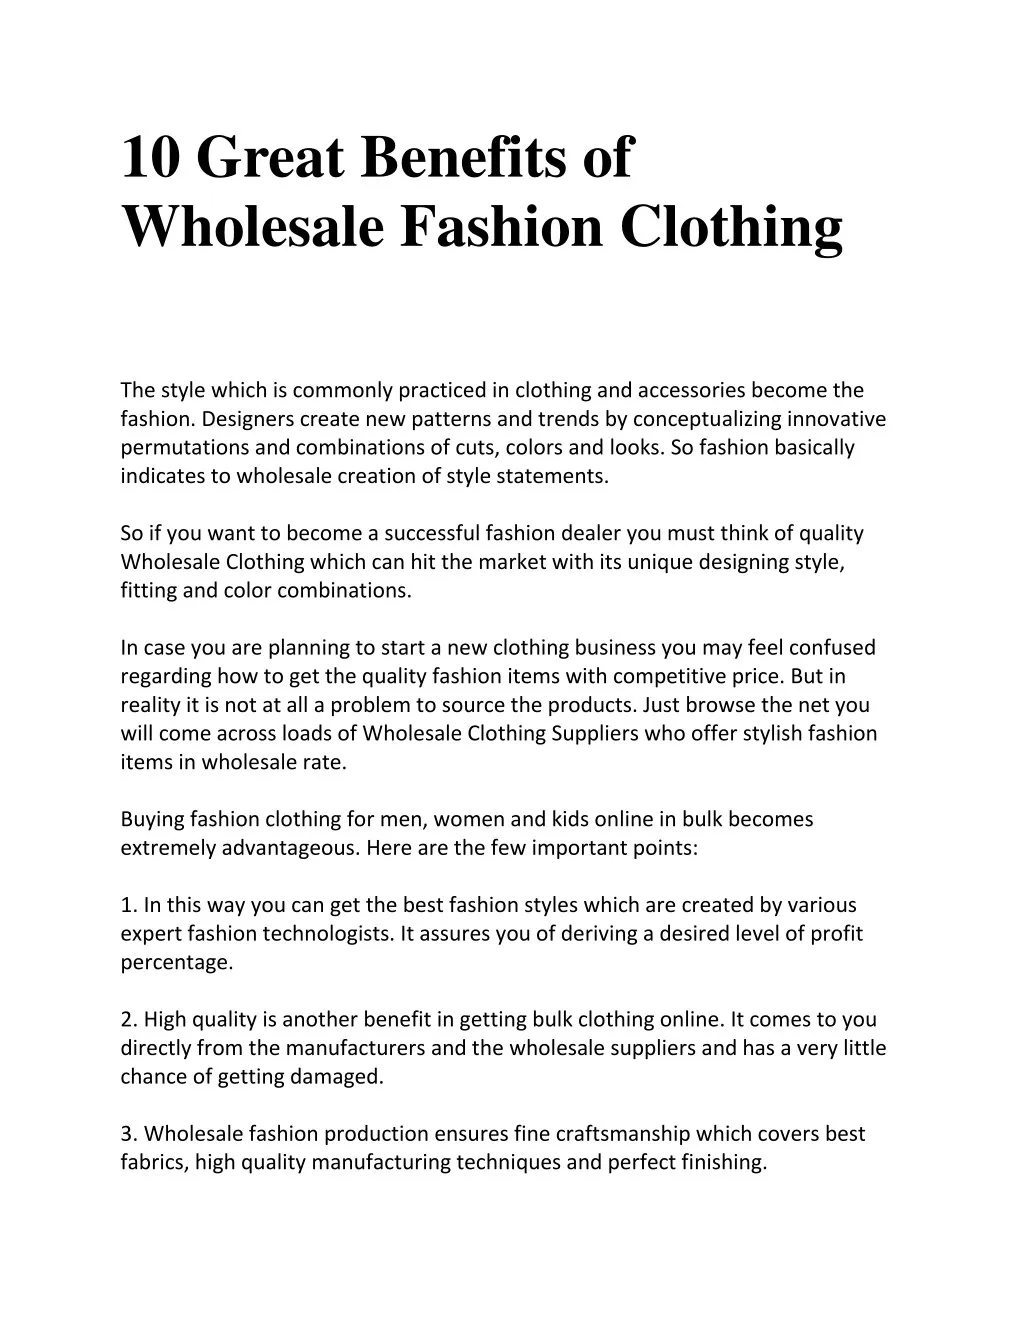 10 great benefits of wholesale fashion clothing